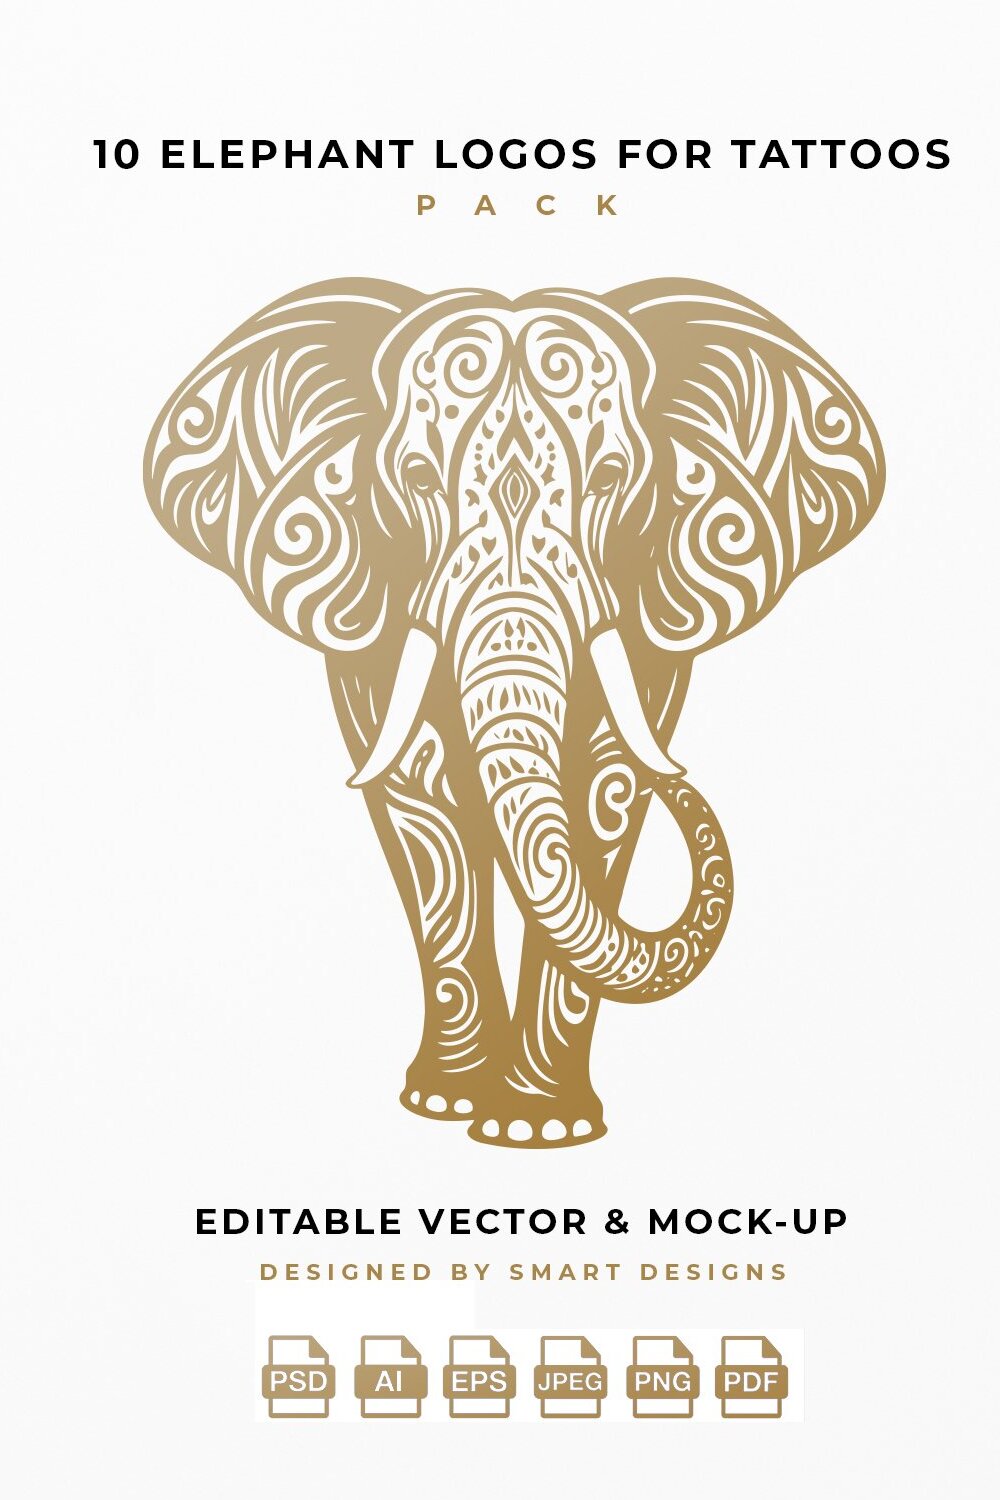 elephant logos for tattoos pack x10 2 260